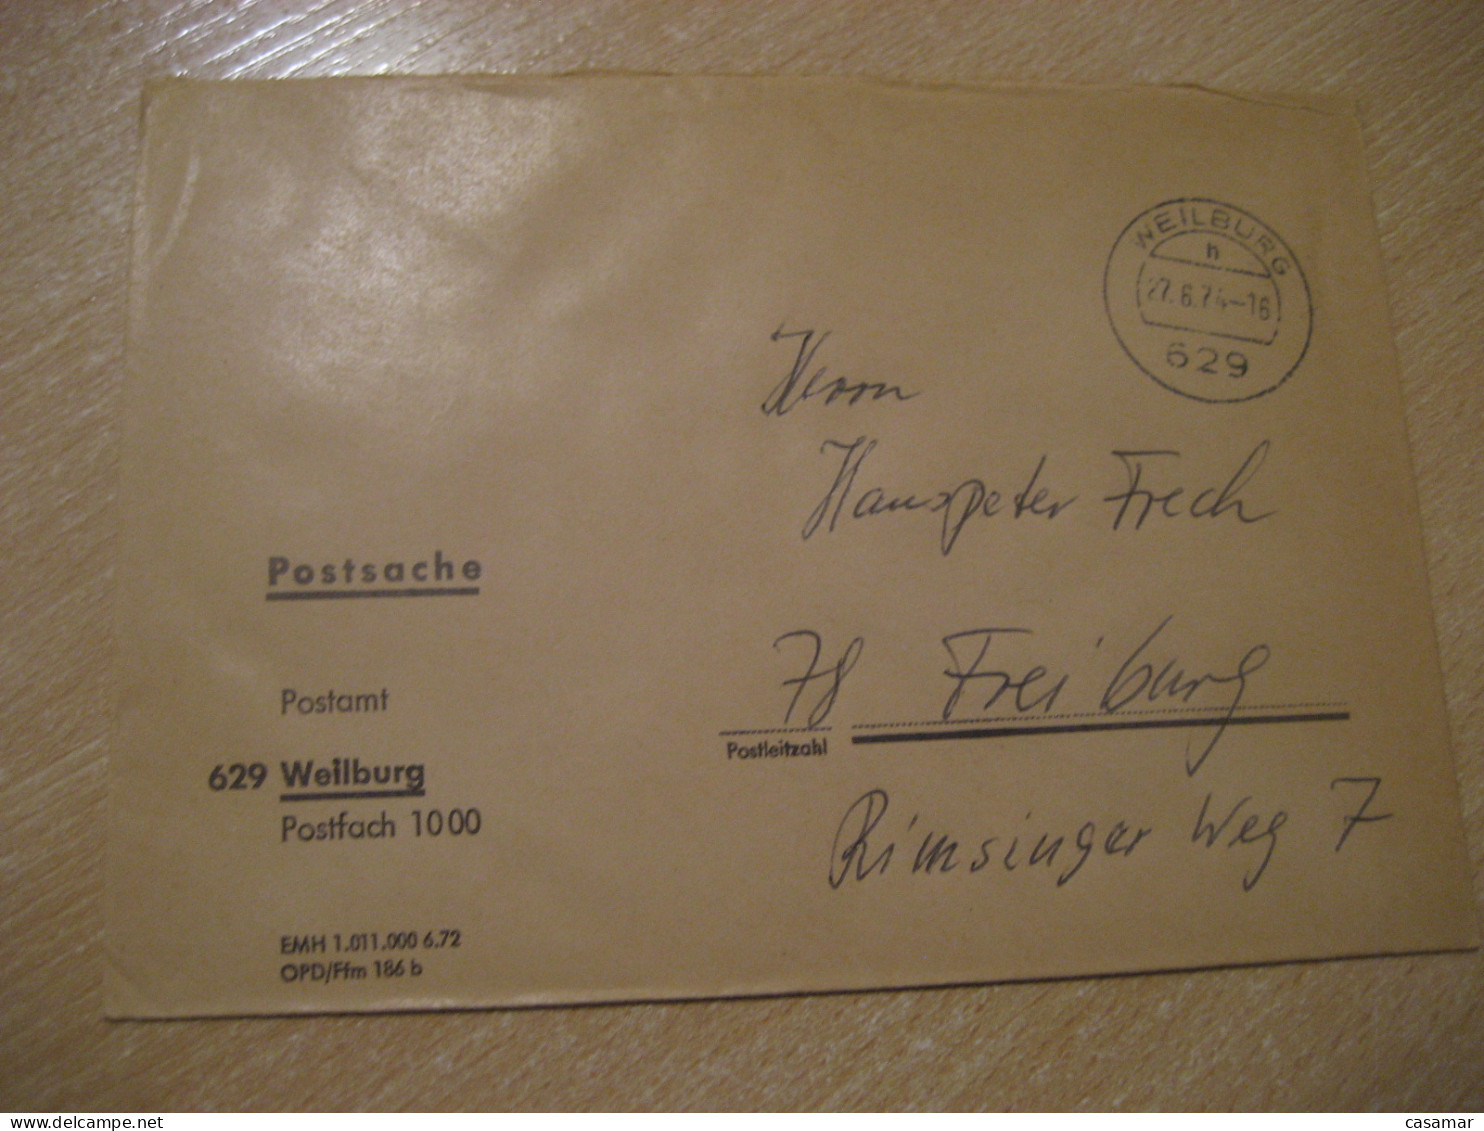 WEILBURG 1974 To Freiburg Postage Paid Cancel Cover GERMANY - Briefe U. Dokumente